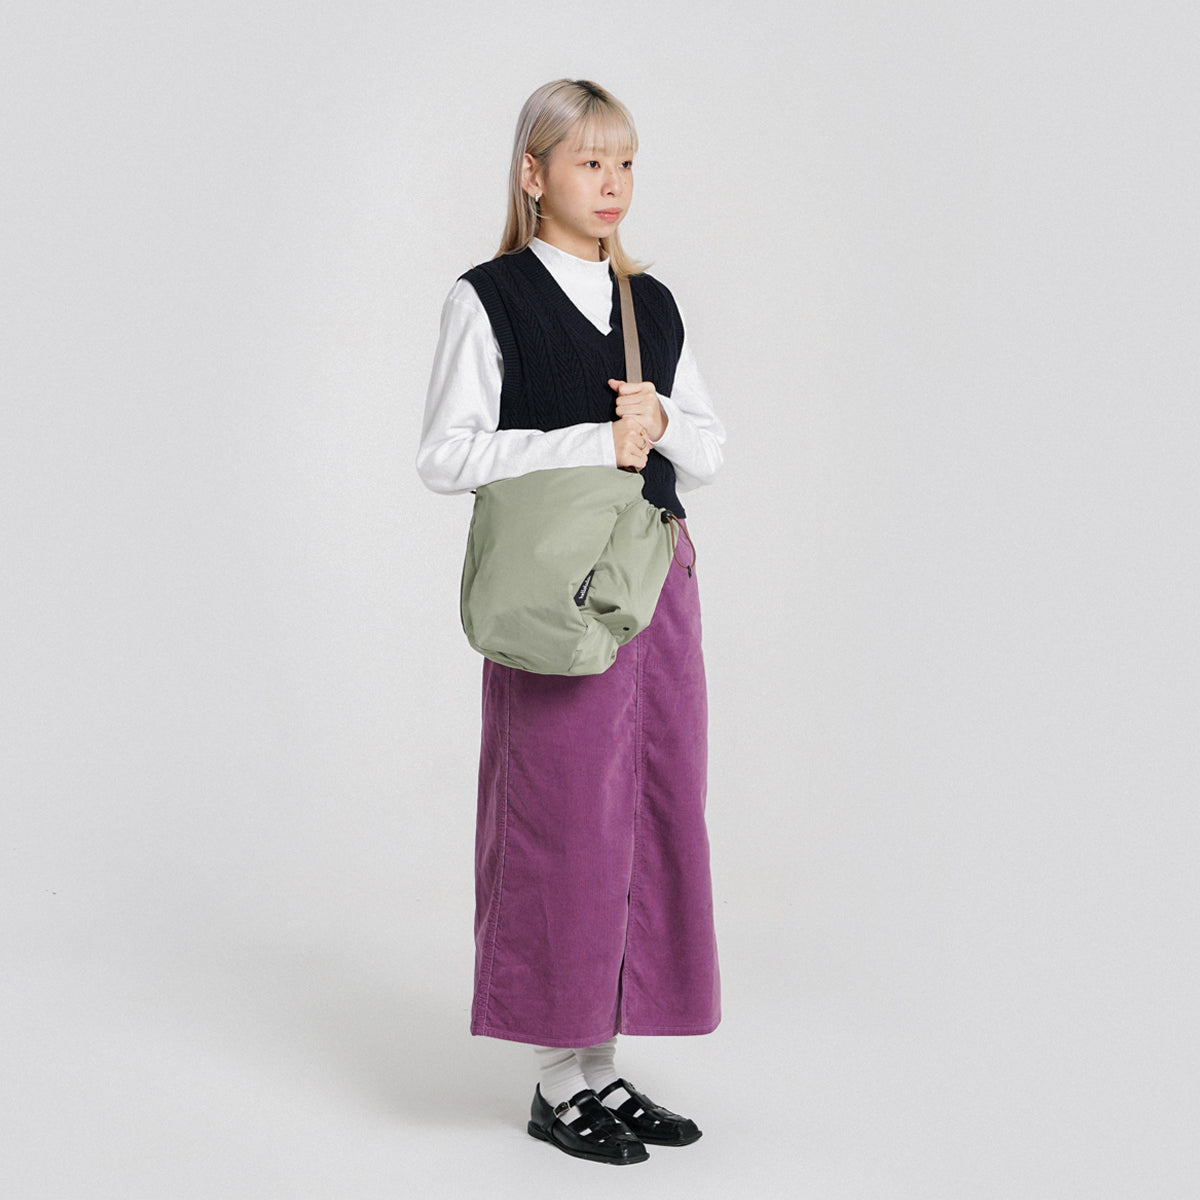 REA - Daily Duo Shoulder Bag (S)